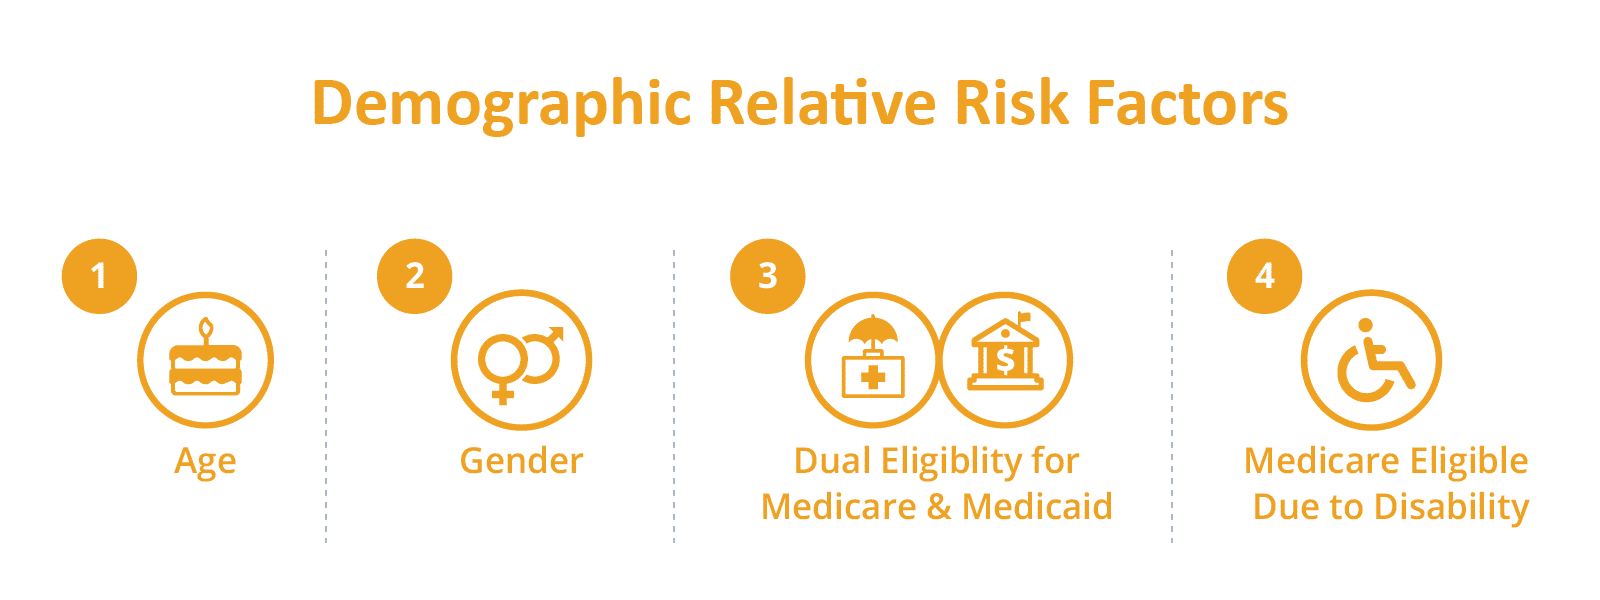 Demographic Relative Risk Factors